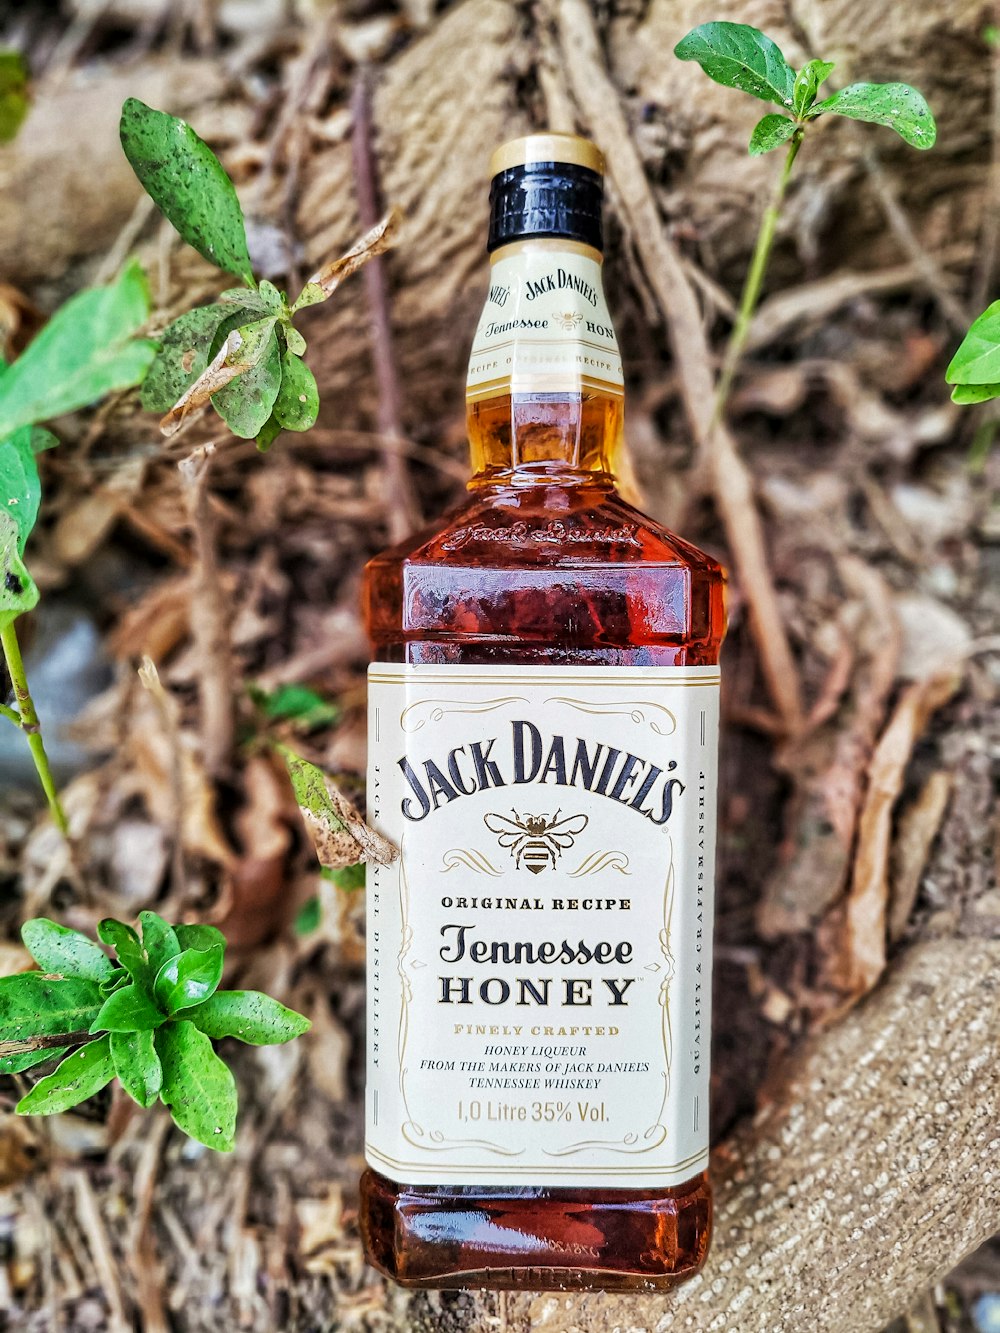 Jack Daniels Tennessee Honey bottle